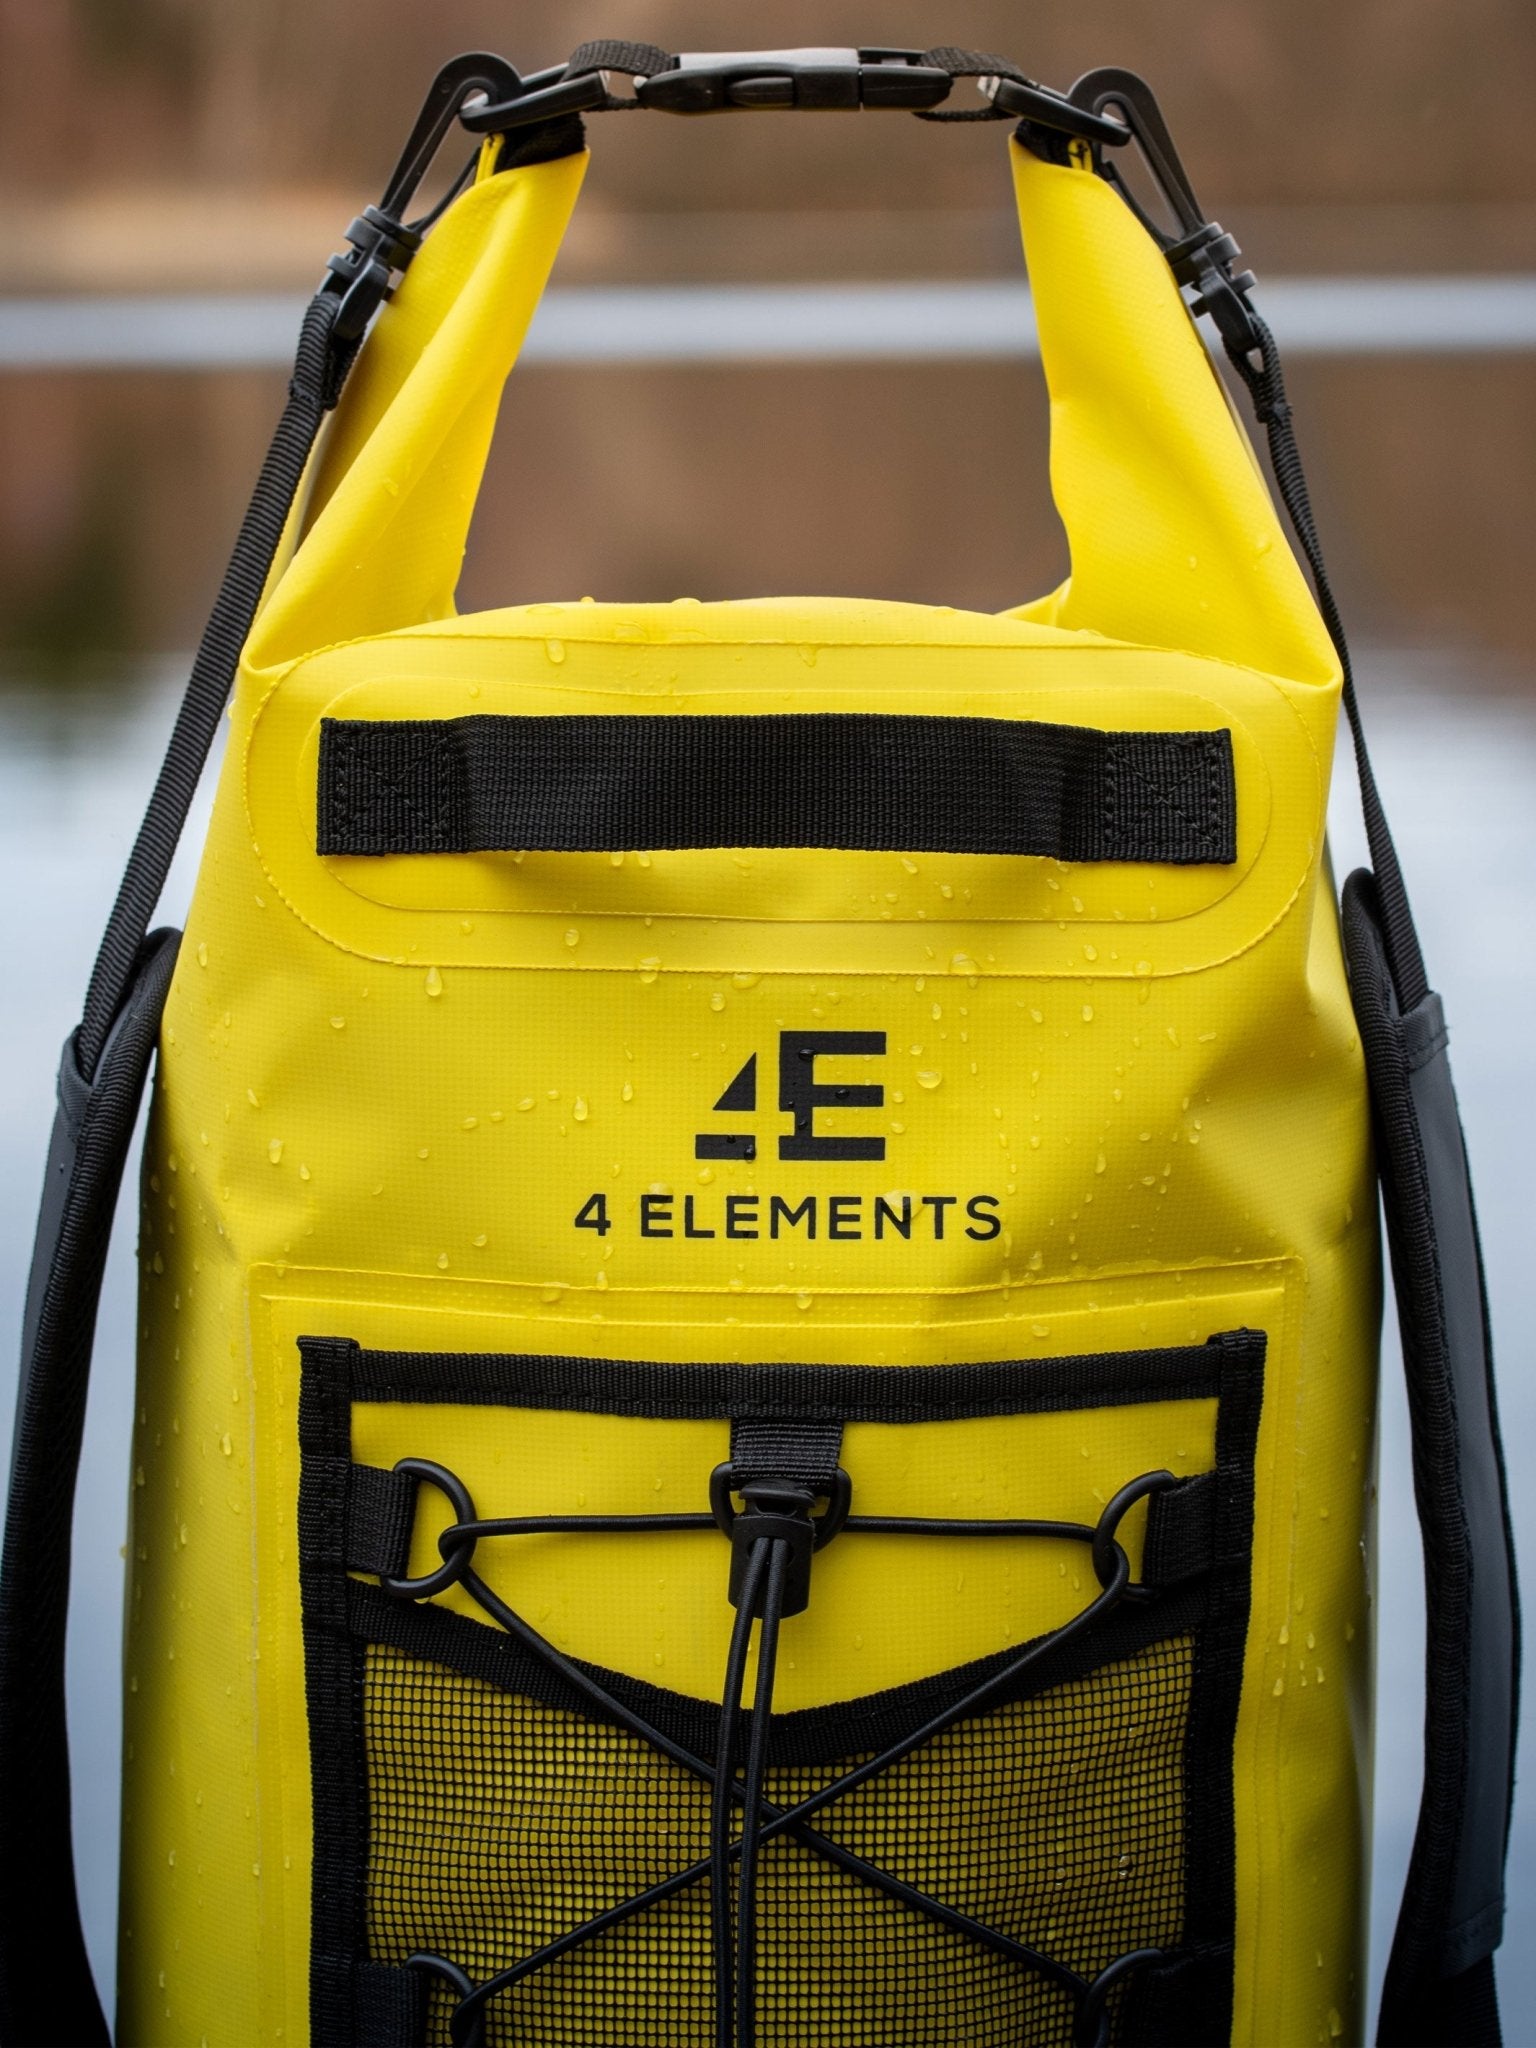 4elementsclothing4 Elements Clothing4 Elements - Waterproof bag and Dry Bag Roll Top waterproof Rucksack, Wet bag & Hiking, waters sports or camping bag, 20L drybagBackpacks4EC-DBG20-CAM